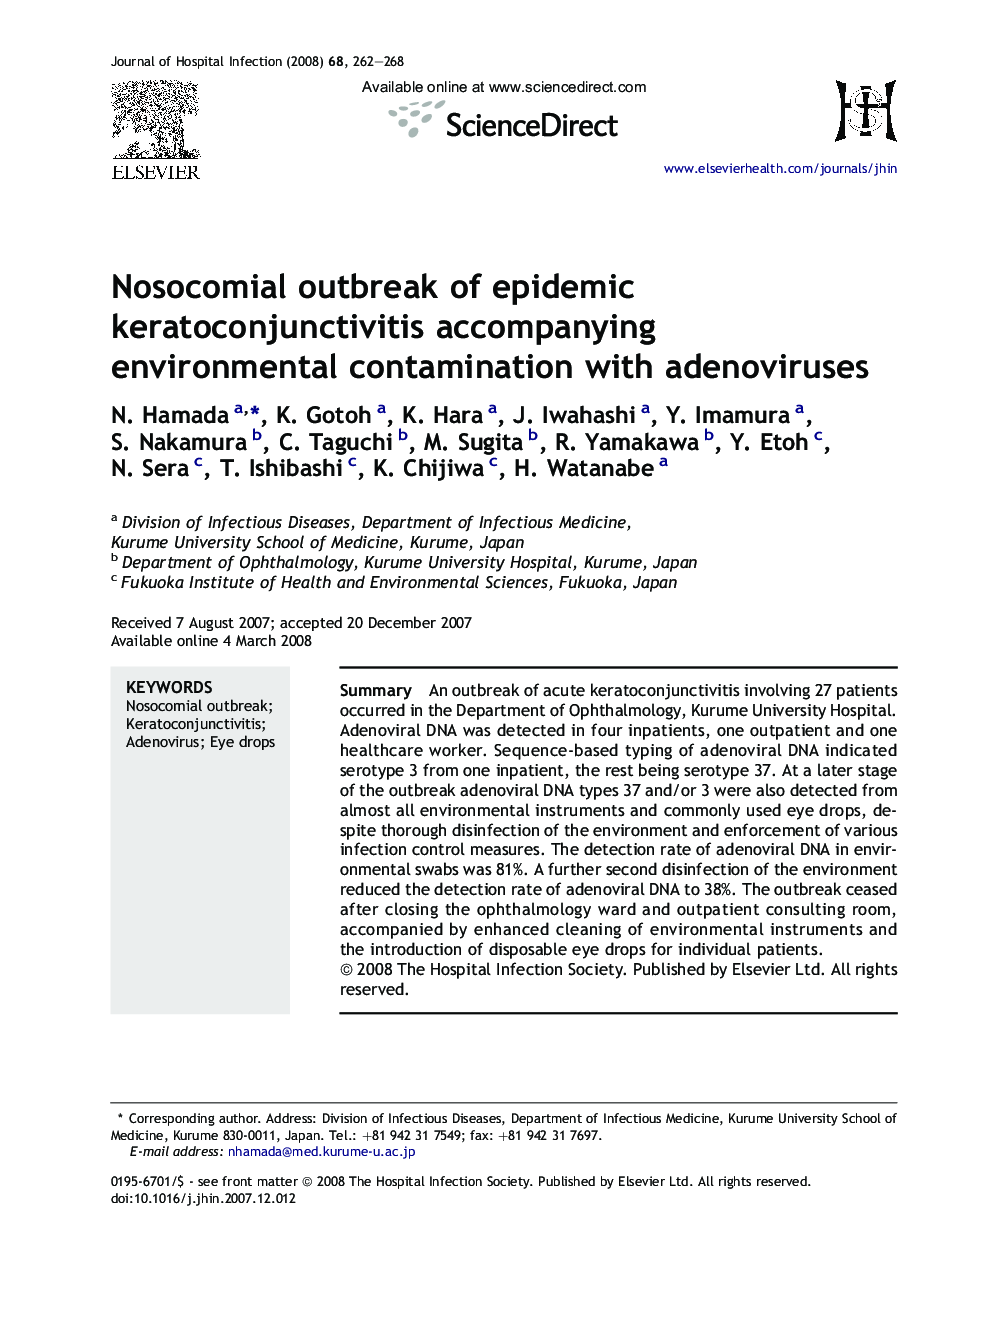 Nosocomial outbreak of epidemic keratoconjunctivitis accompanying environmental contamination with adenoviruses